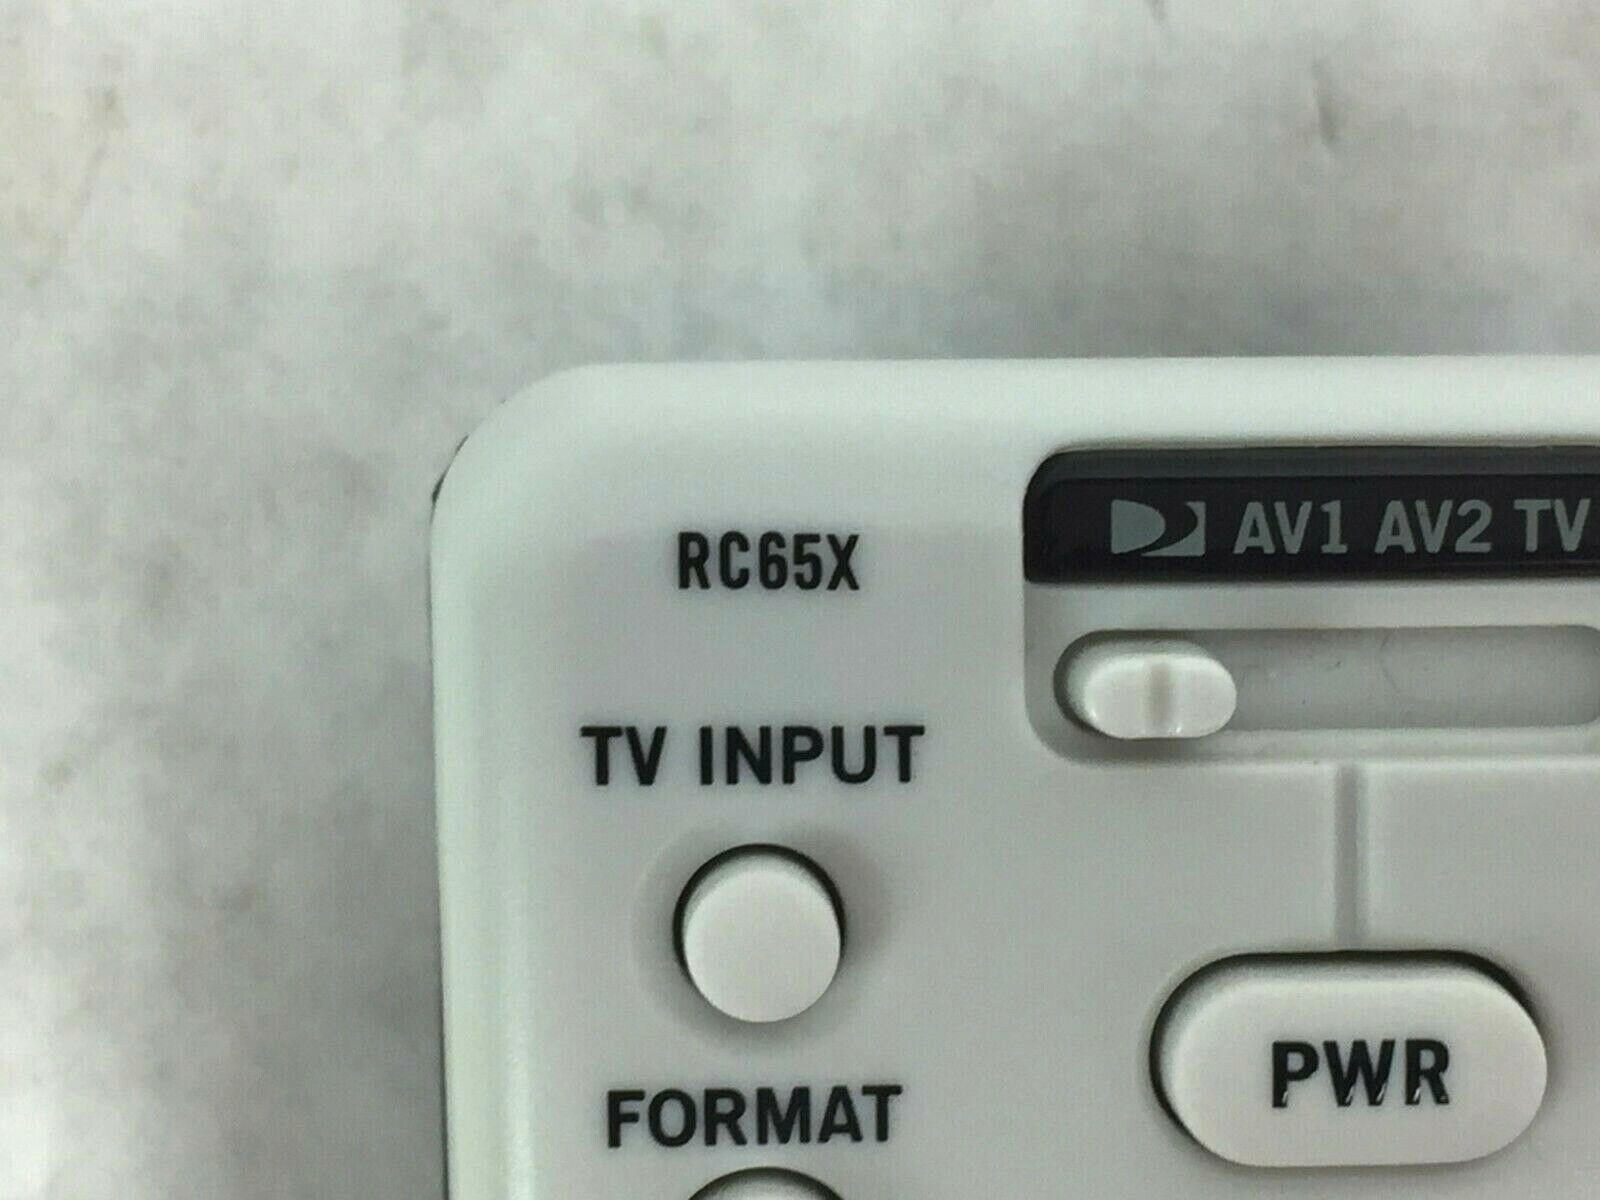 Direct TV RC65X Universal IR HD DVR Remote Control